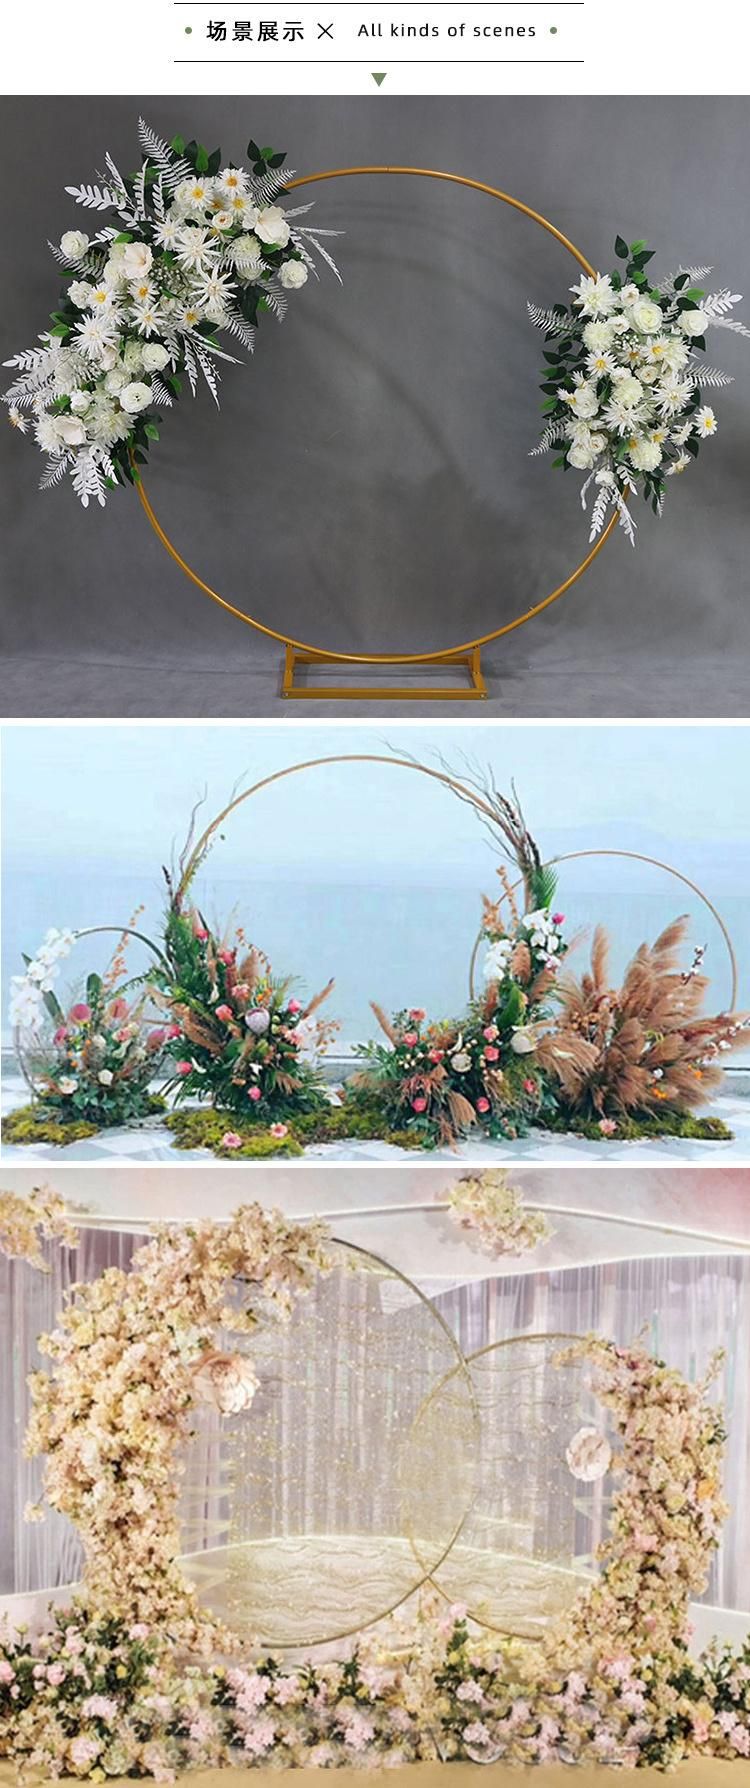 Qianxi DIY Round Arch Stand Backdrop Wedding Backdrop for Party Wedding Decor